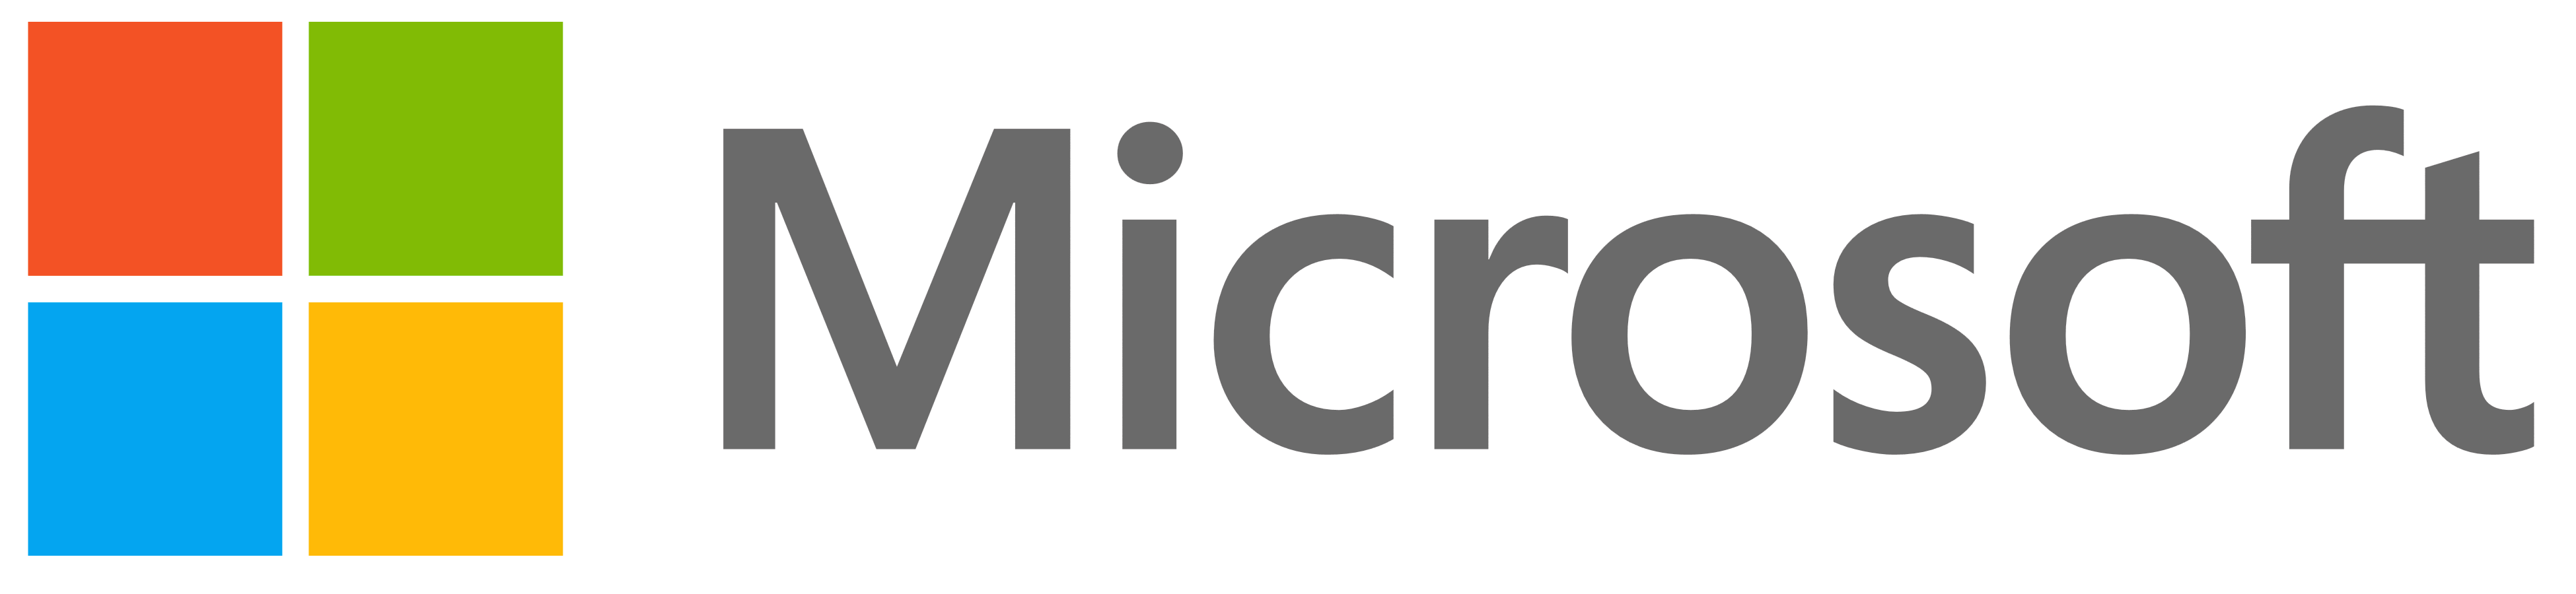 Microsoft logo, logotype